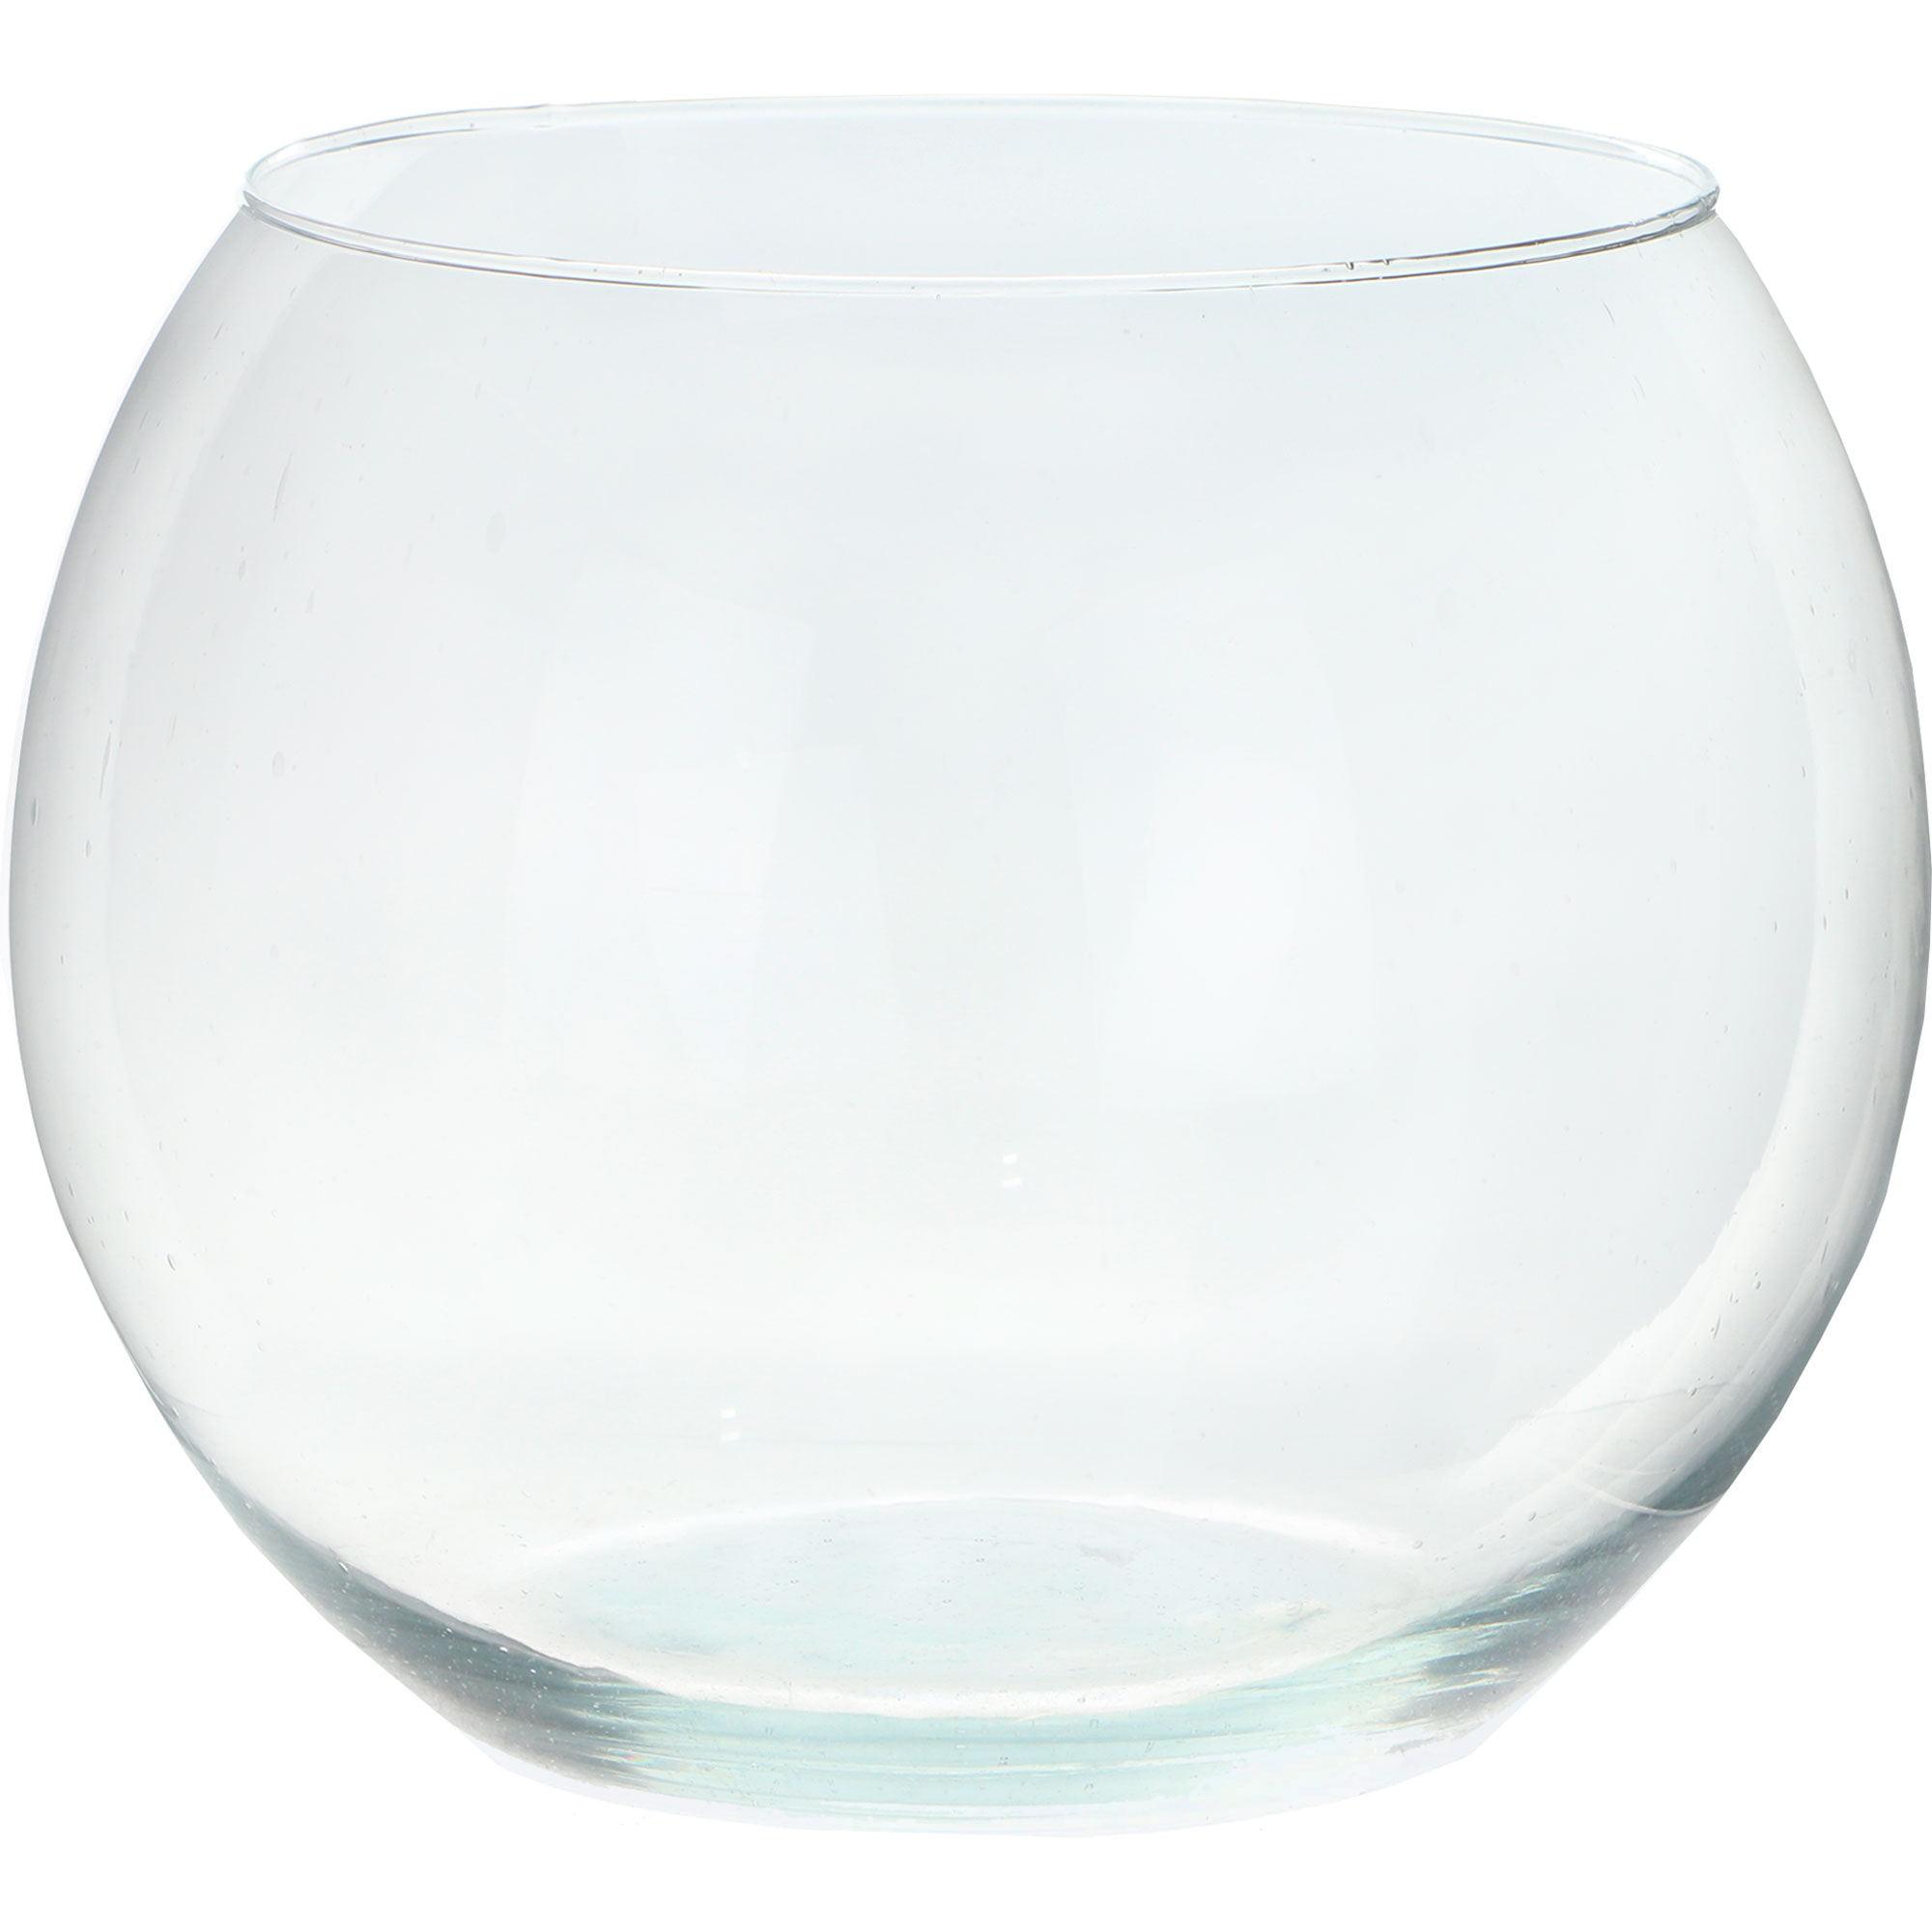 Ваза Hakbijl glass Bubble ball, 20х15.5 см